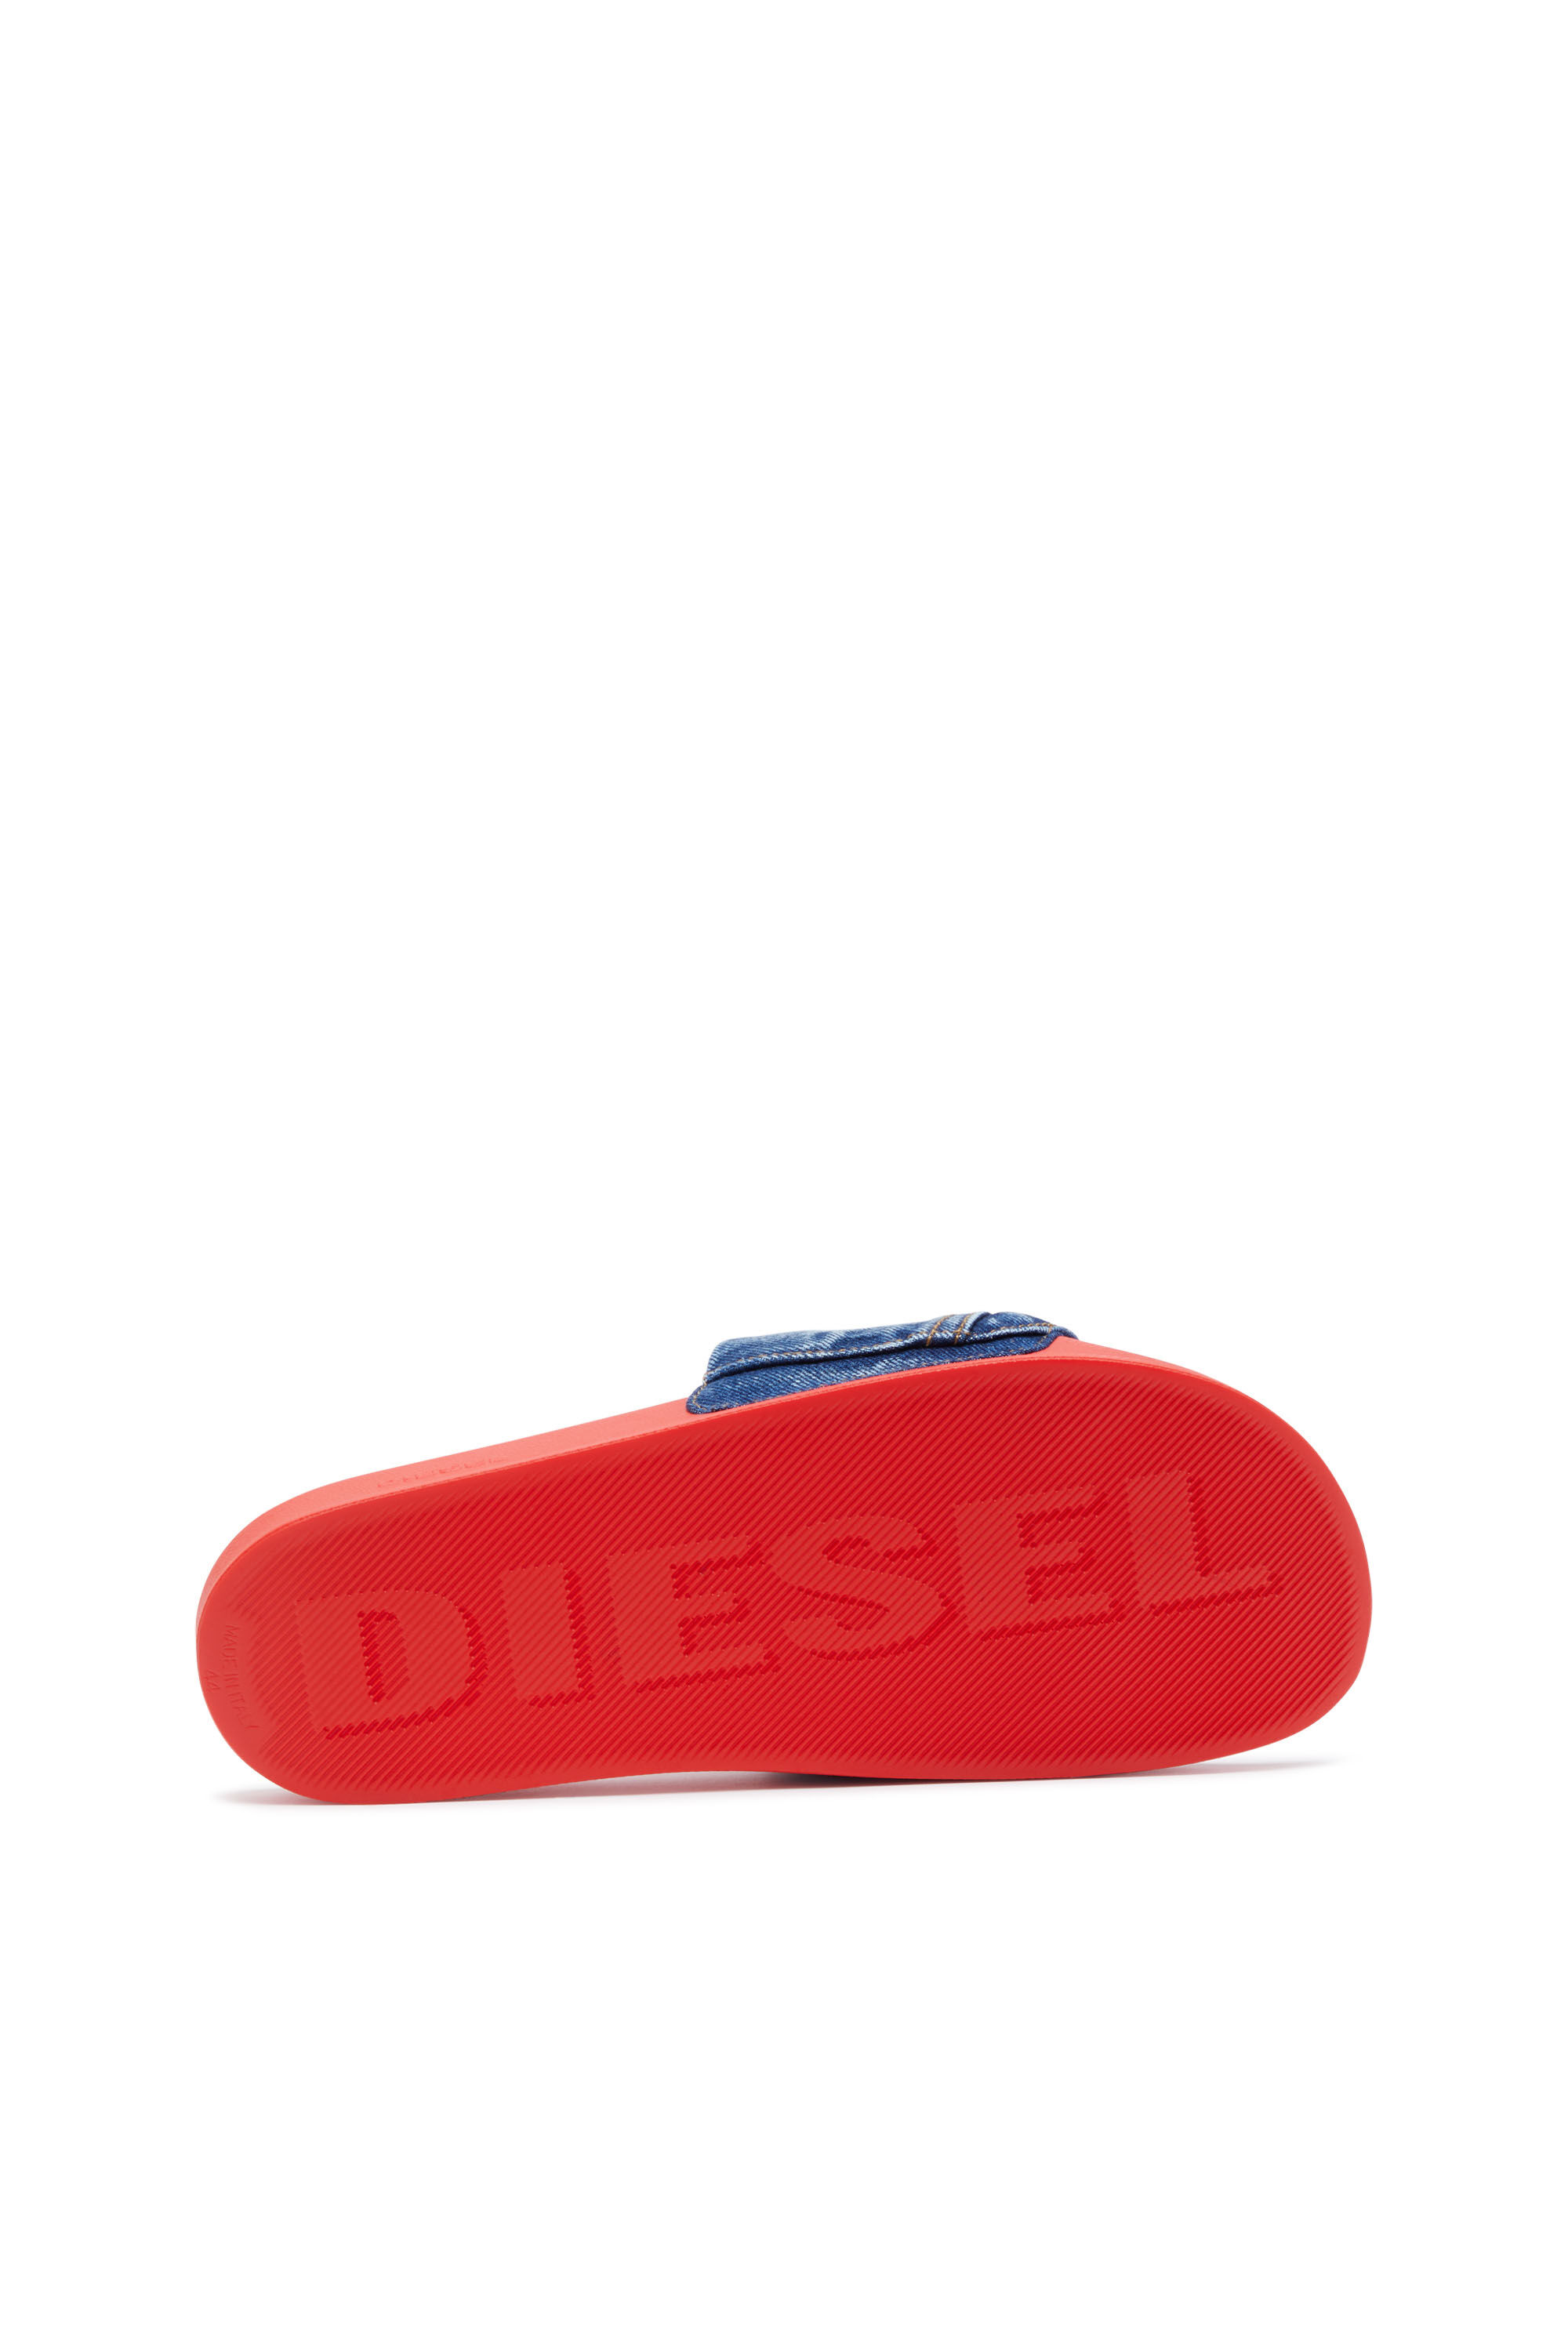 Diesel - SA-MAYEMI PK, Blau/Rot - Image 5